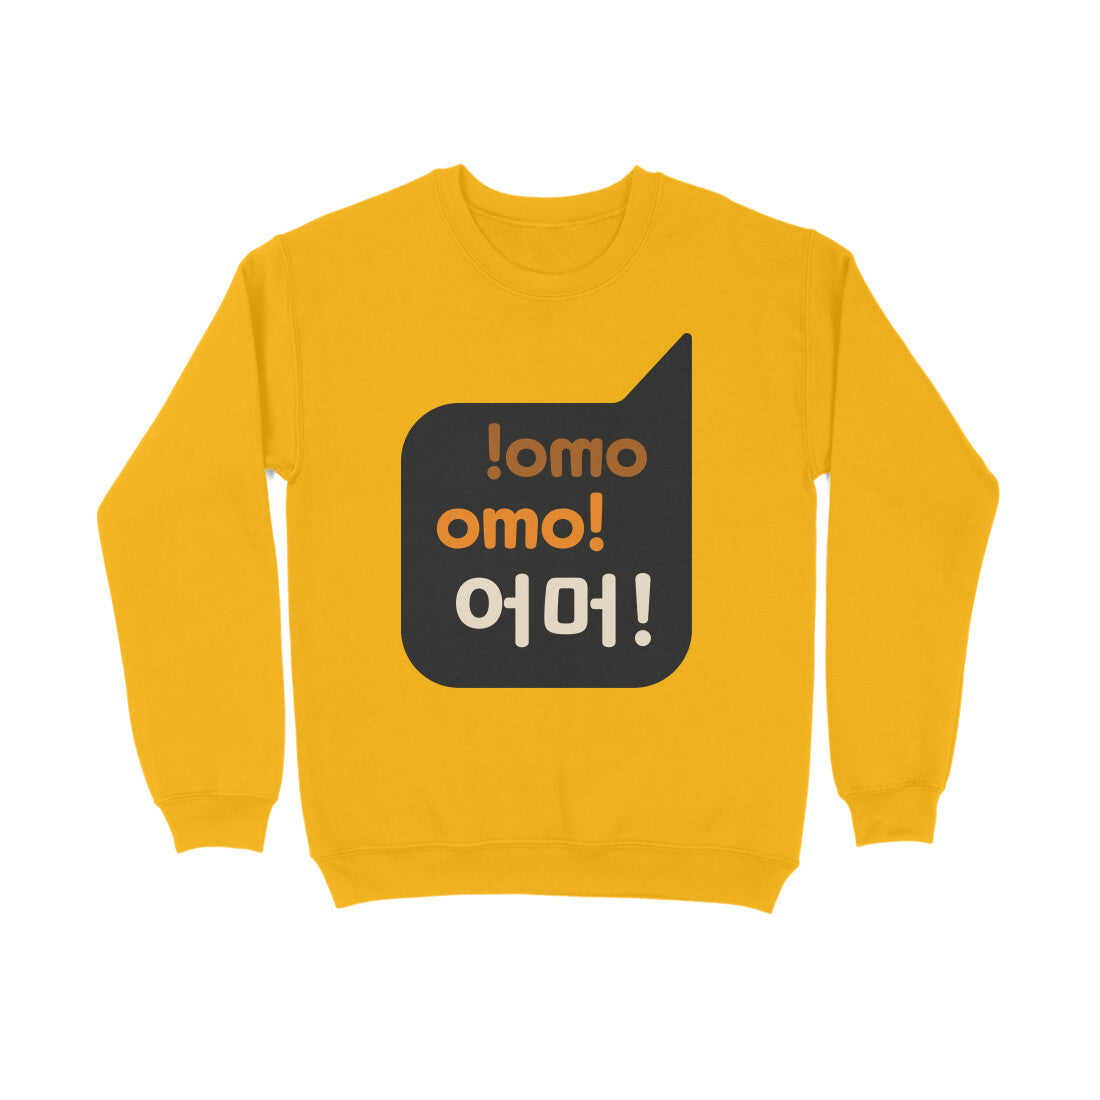 Omo! - Sweatshirt